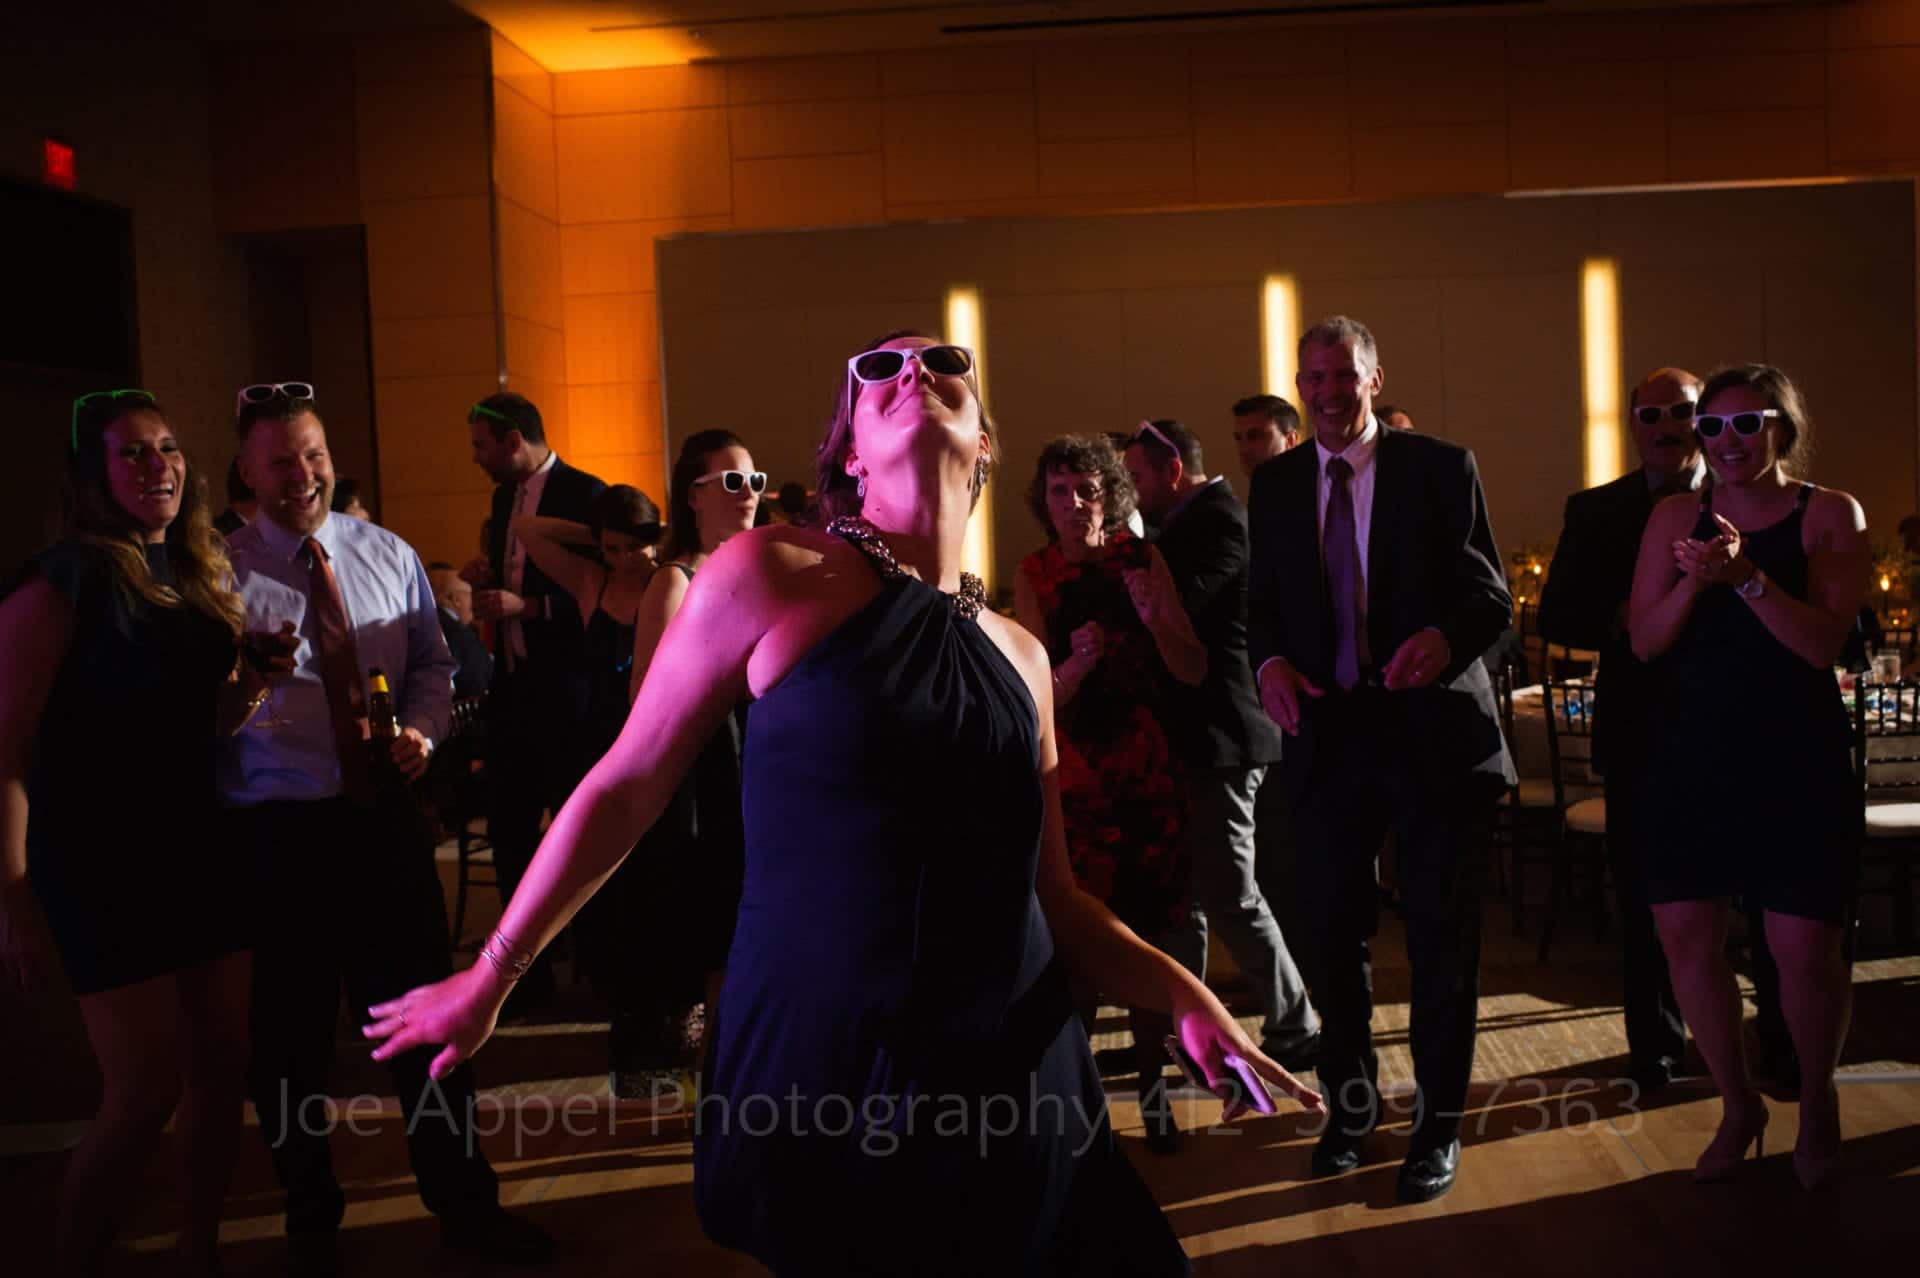 Fairmont Hotel Pittsburgh Weddings A woman wearing sunglasses dances in a purple lit ballroom